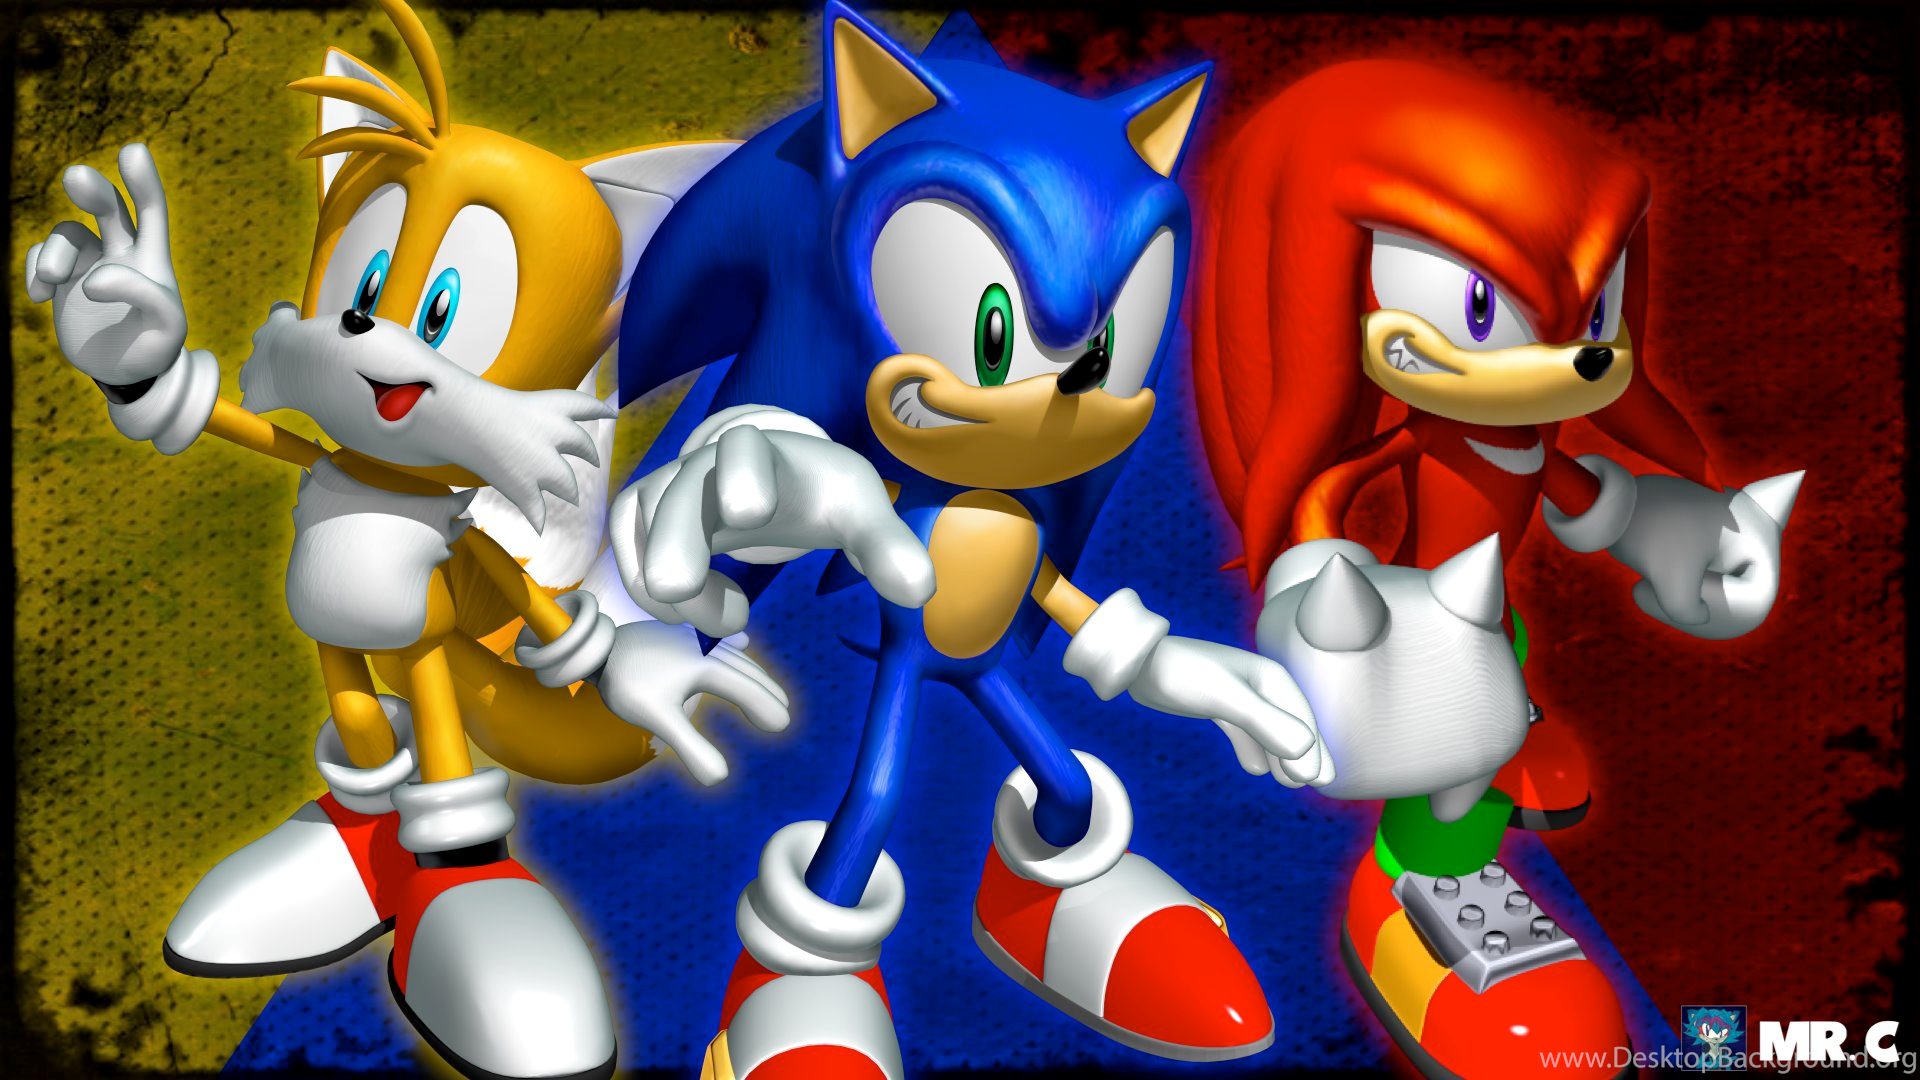 Sonic Heroes Wallpapers